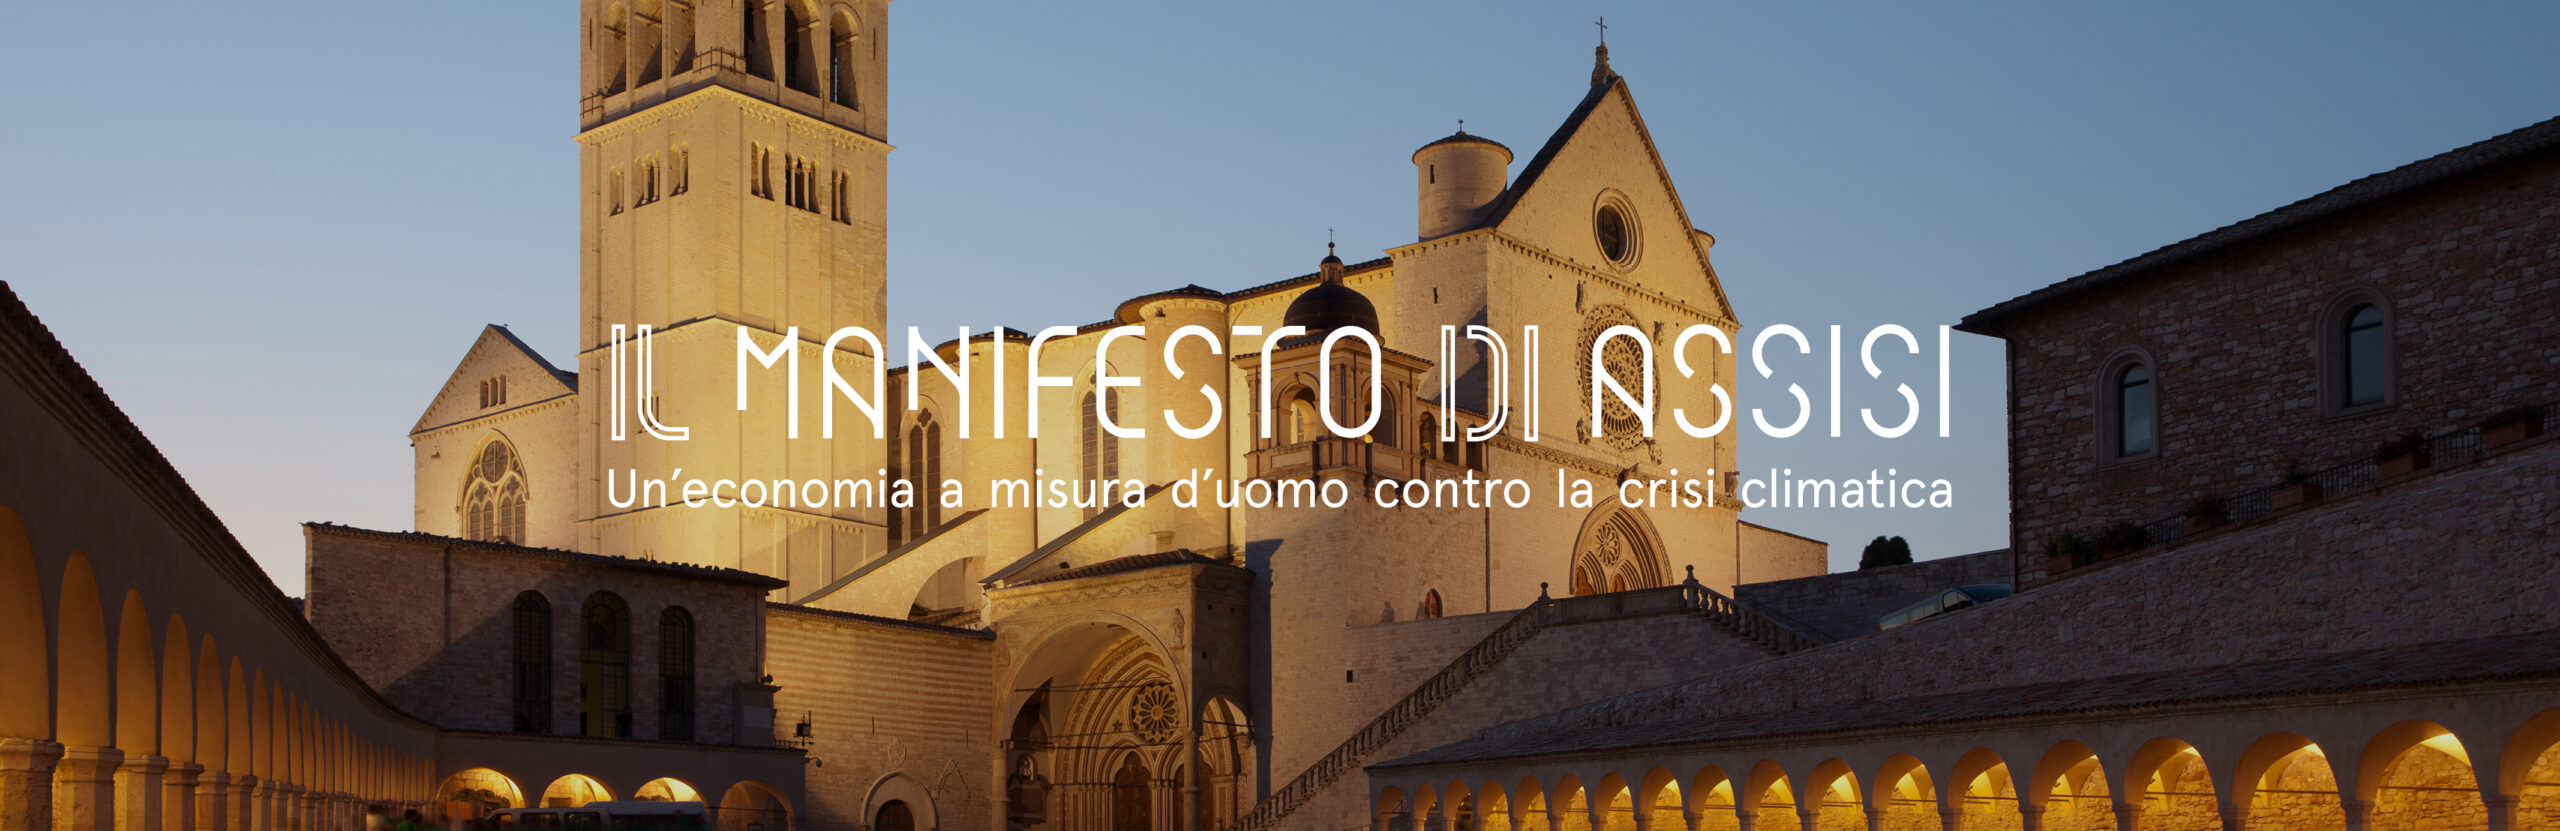 Acqua di Parma to Set Up Temporary Café in Milan